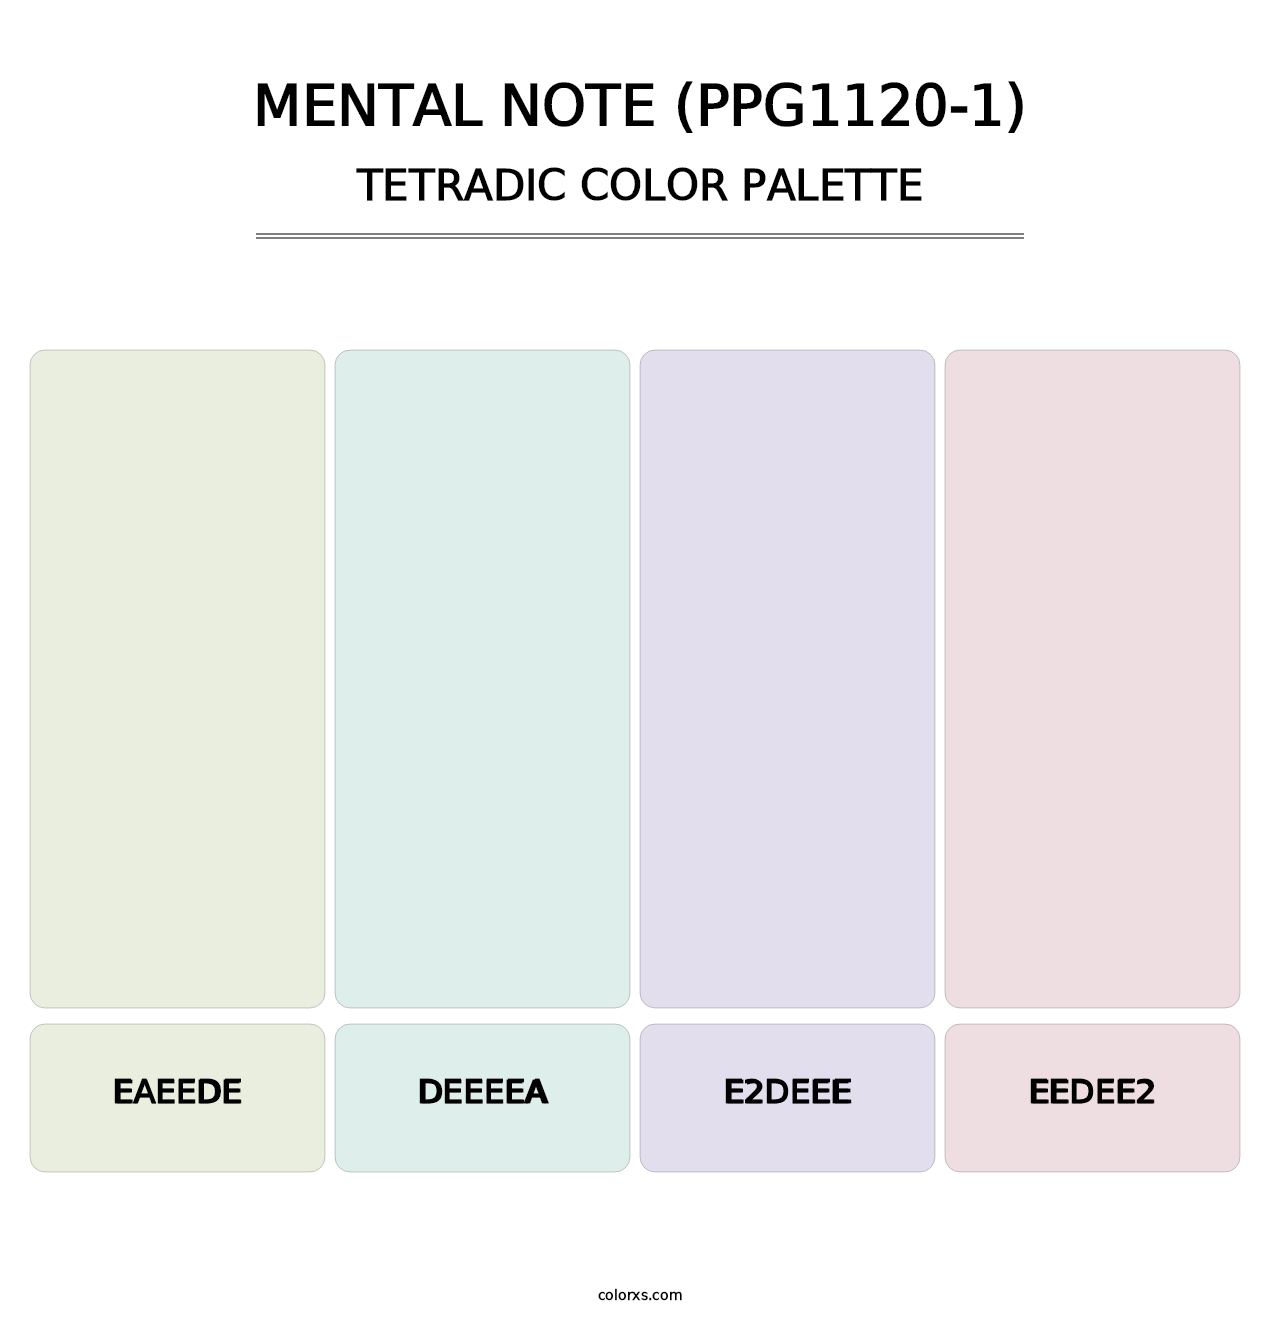 Mental Note (PPG1120-1) - Tetradic Color Palette